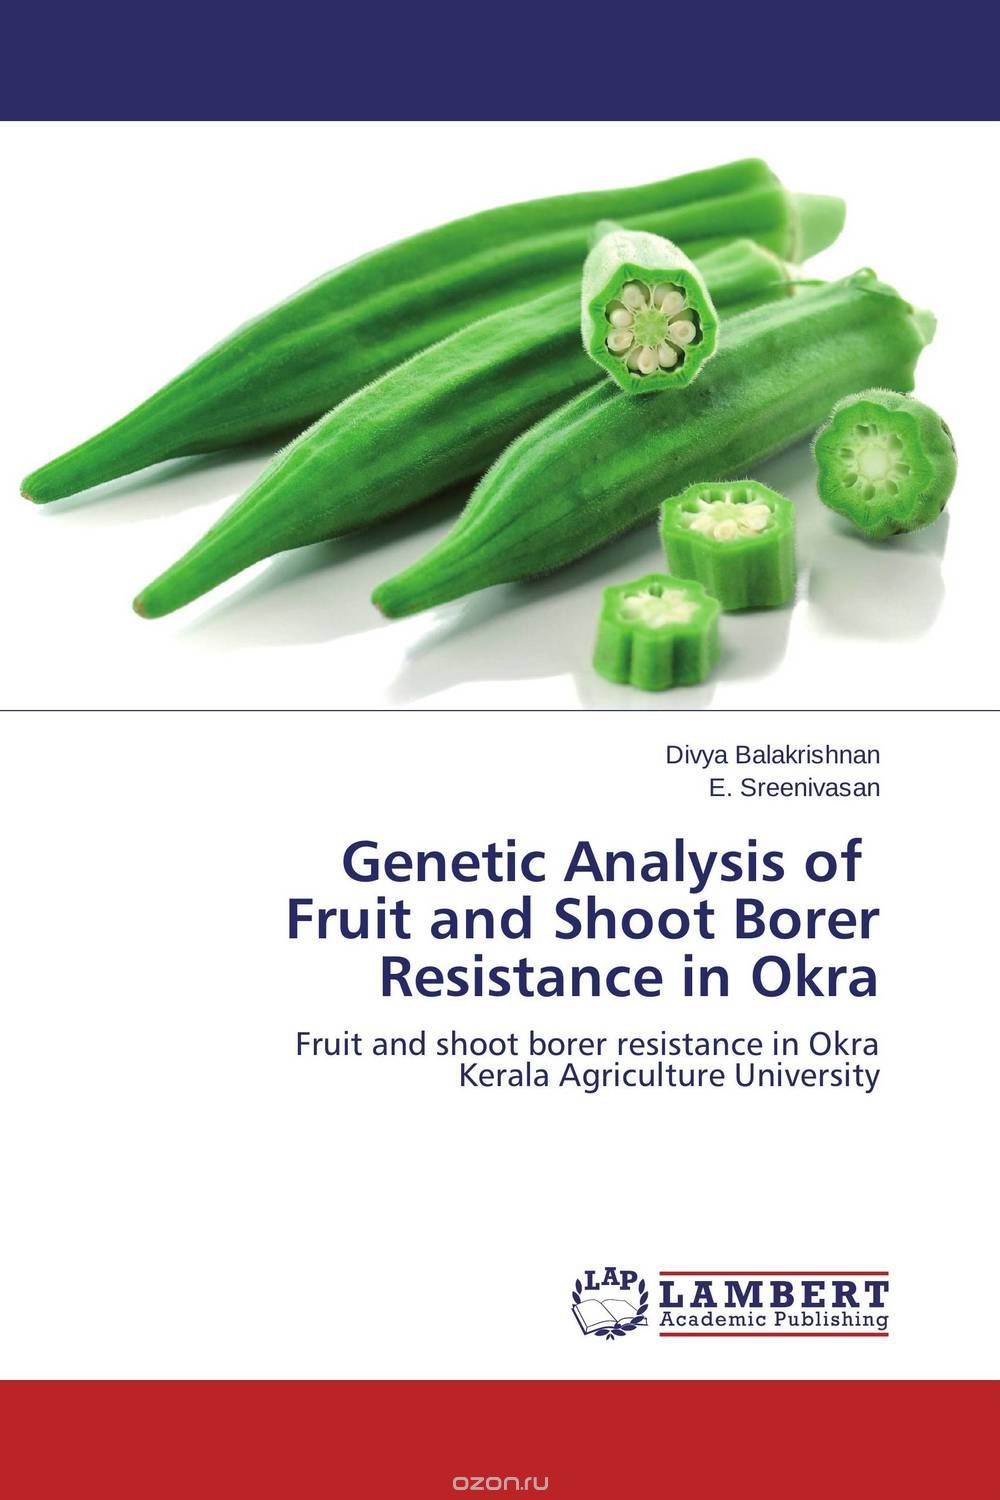 Скачать книгу "Genetic Analysis of   Fruit and Shoot Borer Resistance in Okra"